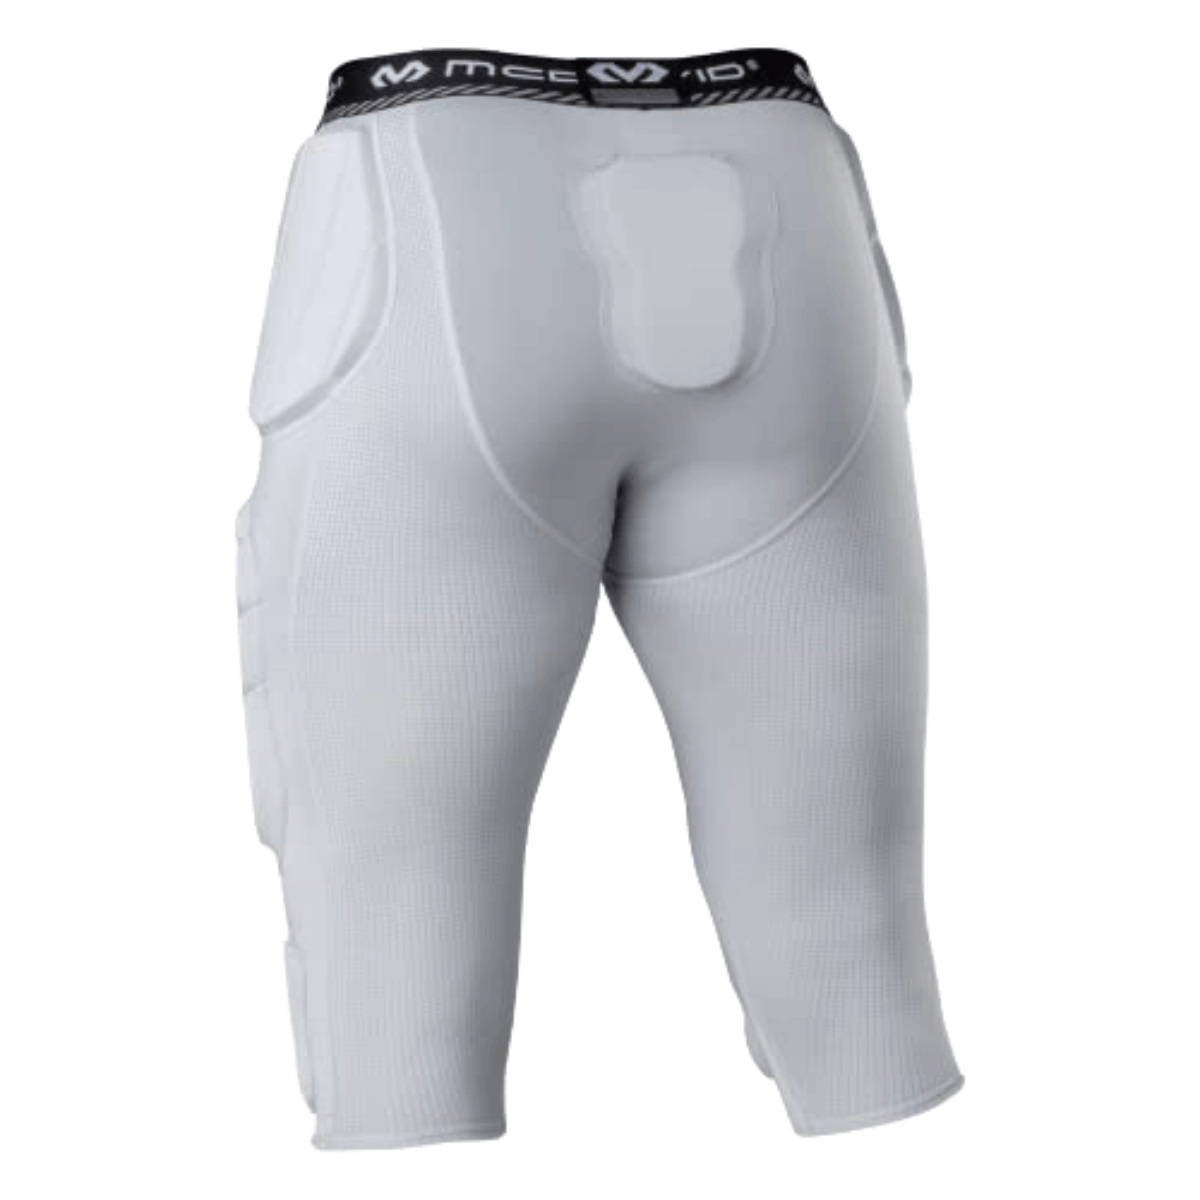  CHAMPRO 7-Pad Girdle Football Pants, White, Adult